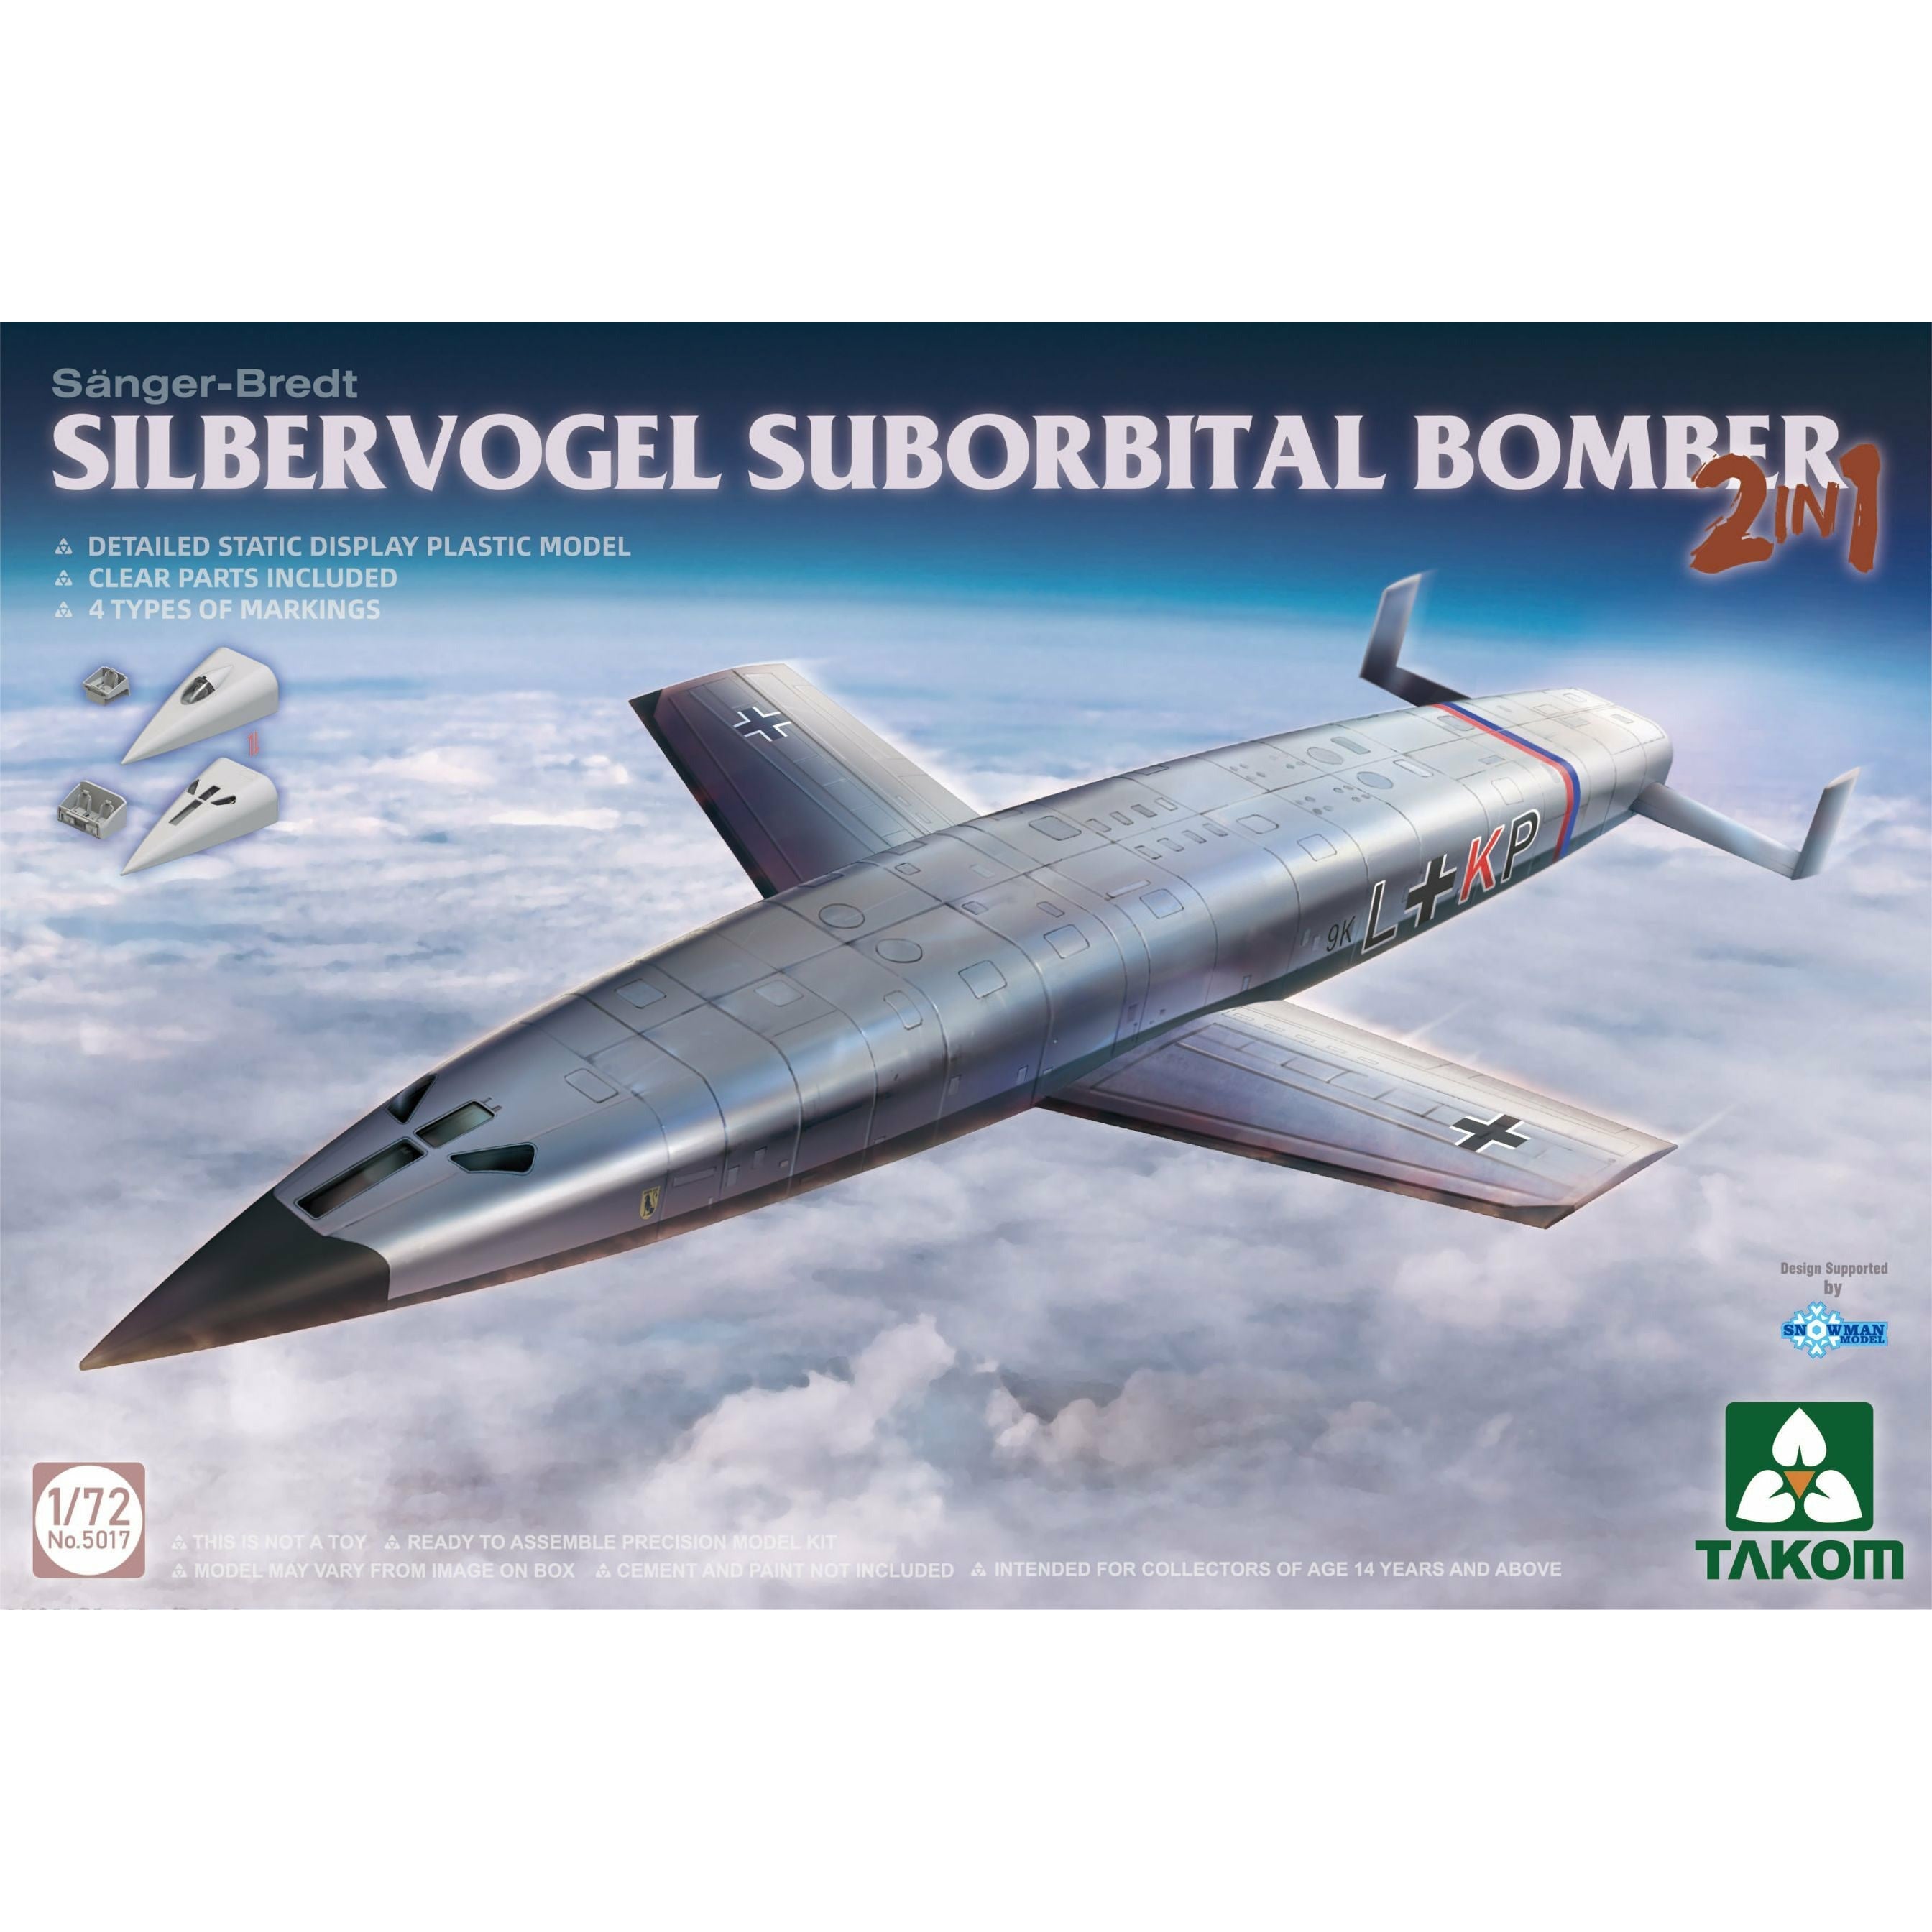 Silbervogel Suborbital Bomber 1/35 #5017 by Takom